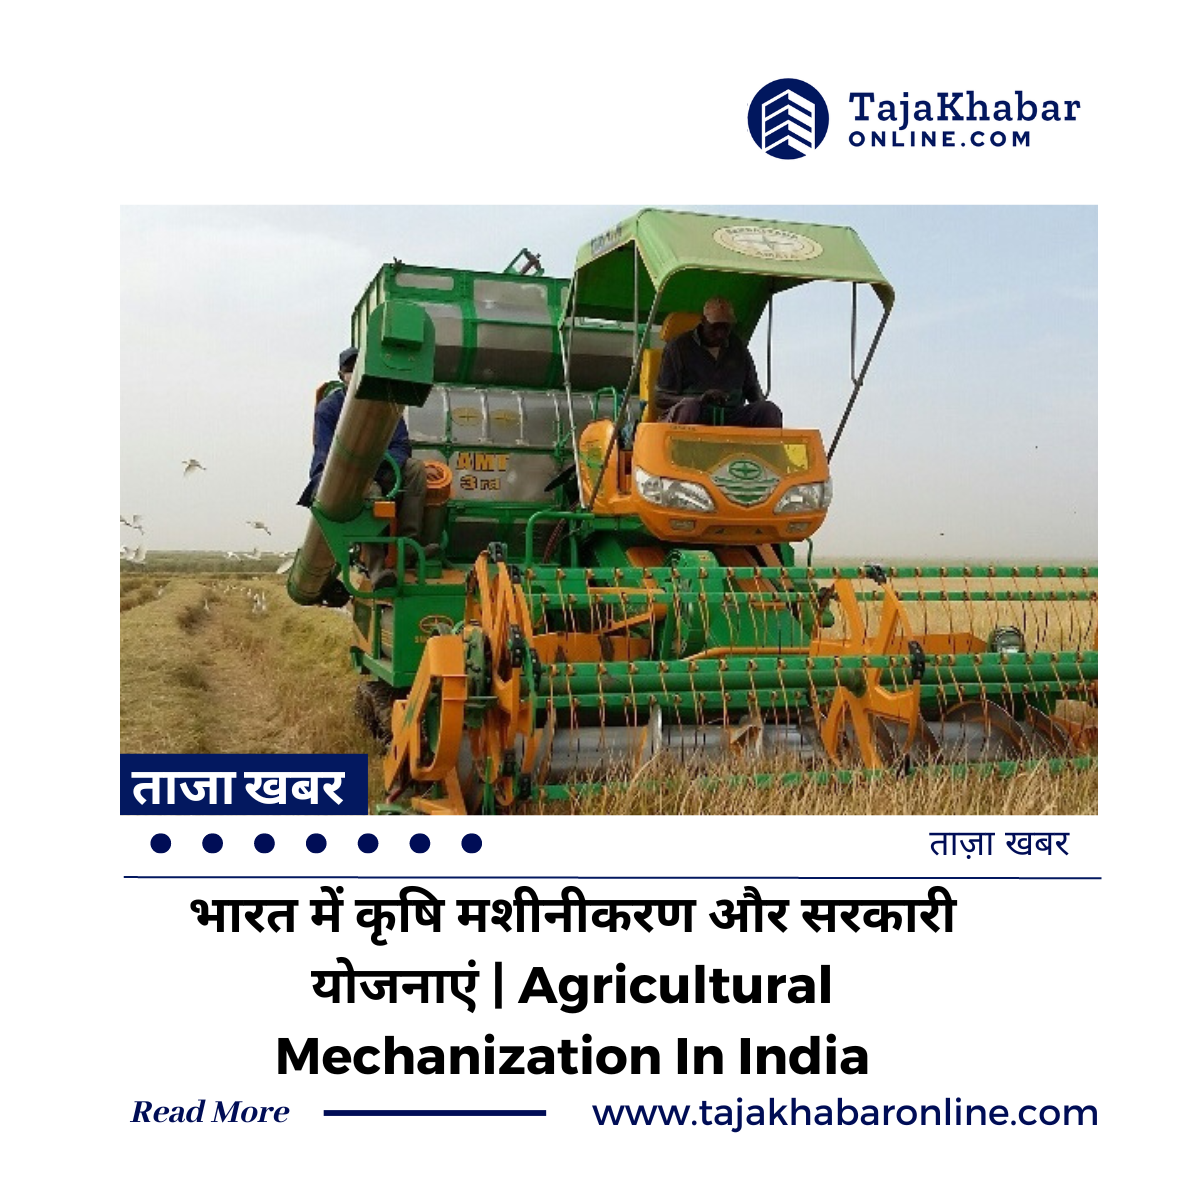 Mechanization In India